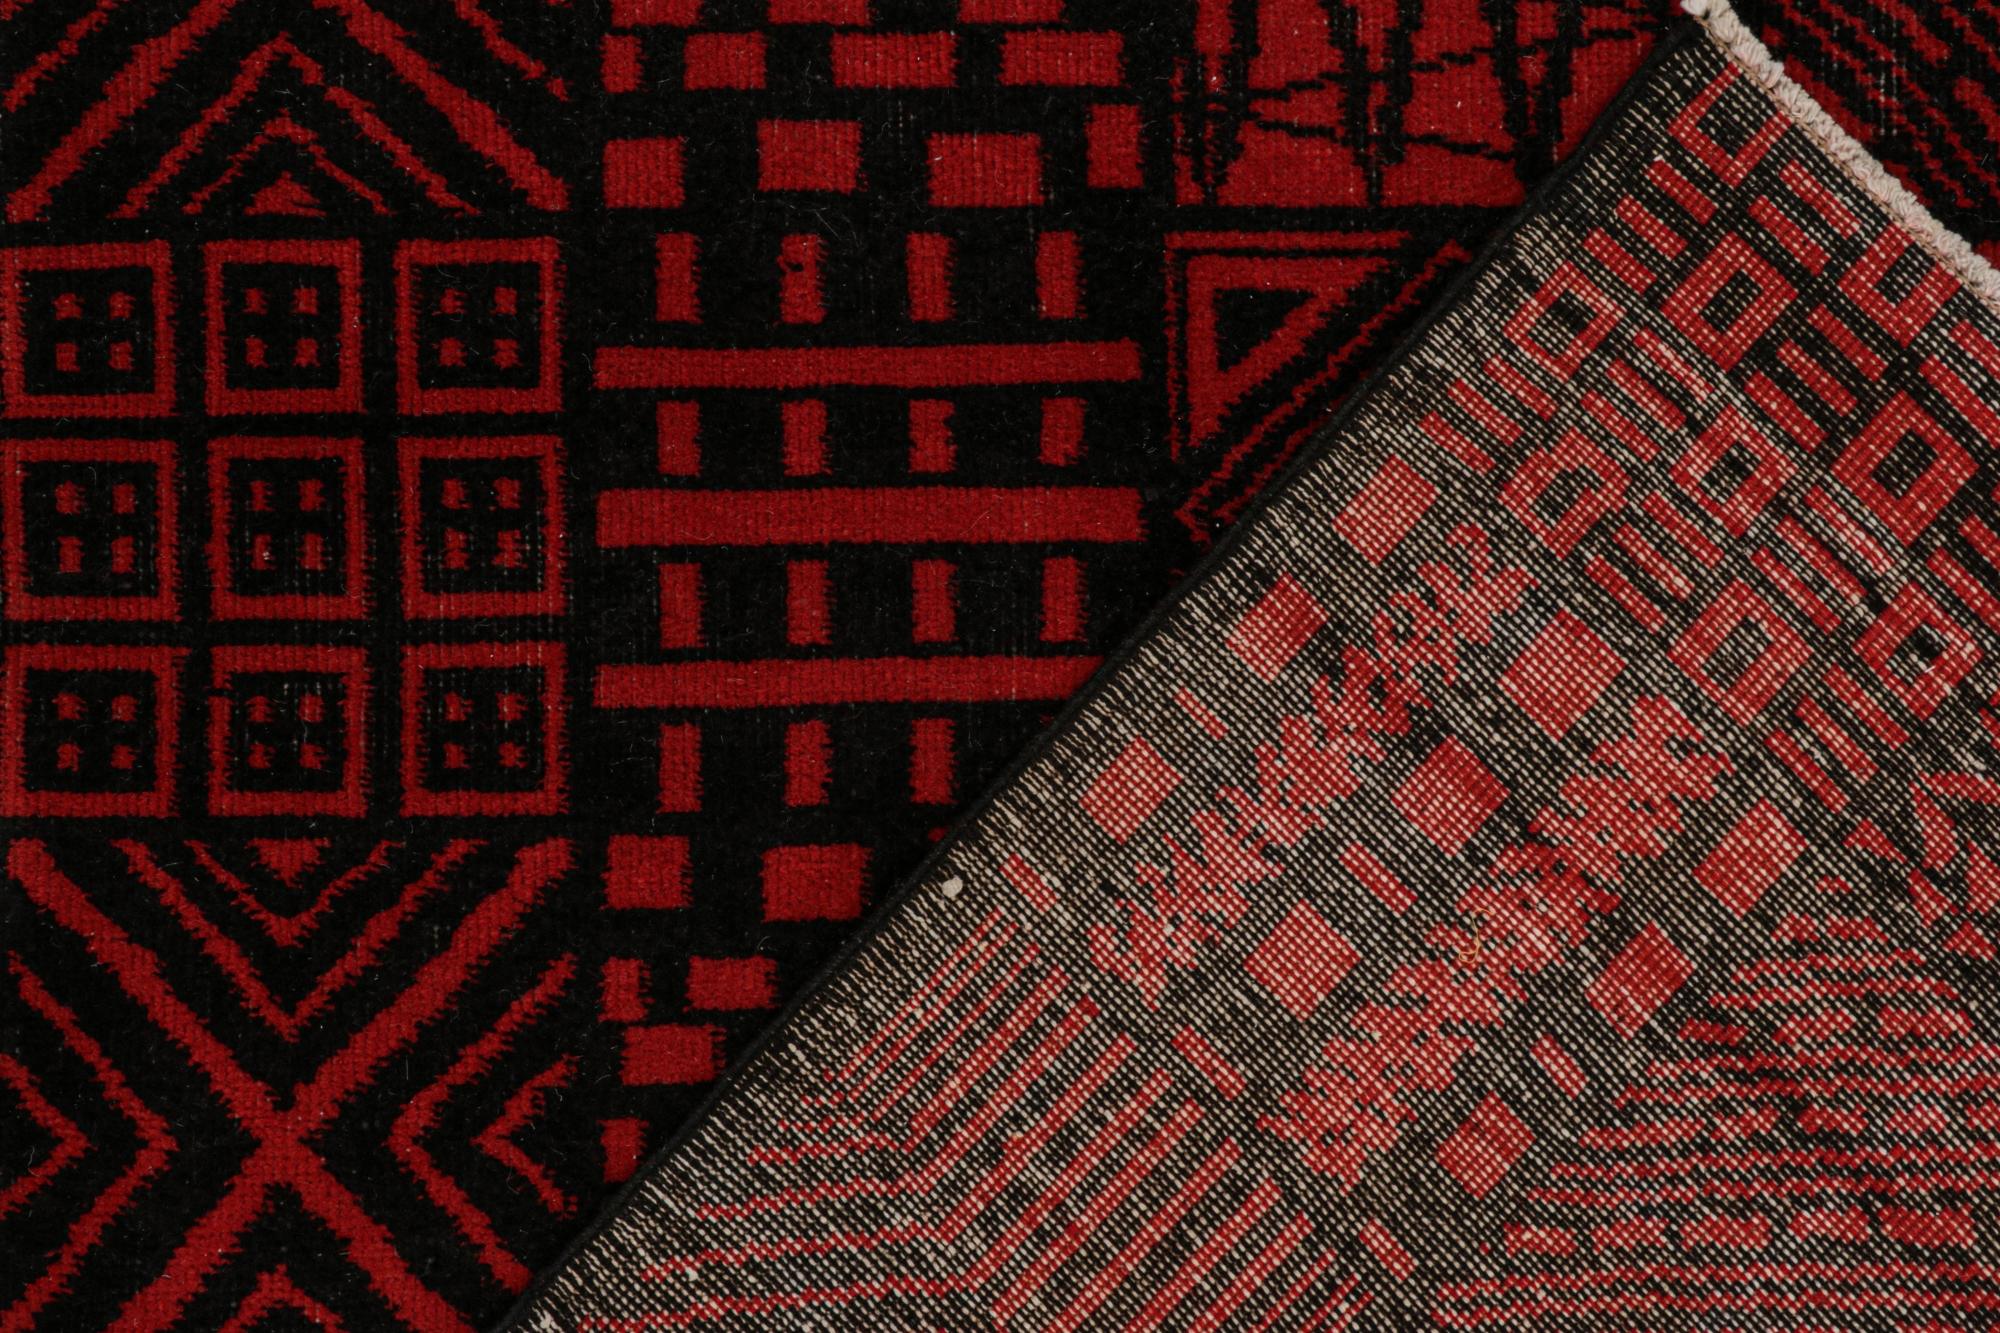 Mid-20th Century Vintage Zeki Müren Rug in Red & Black Geometric Patterns, by Rug & Kilim For Sale